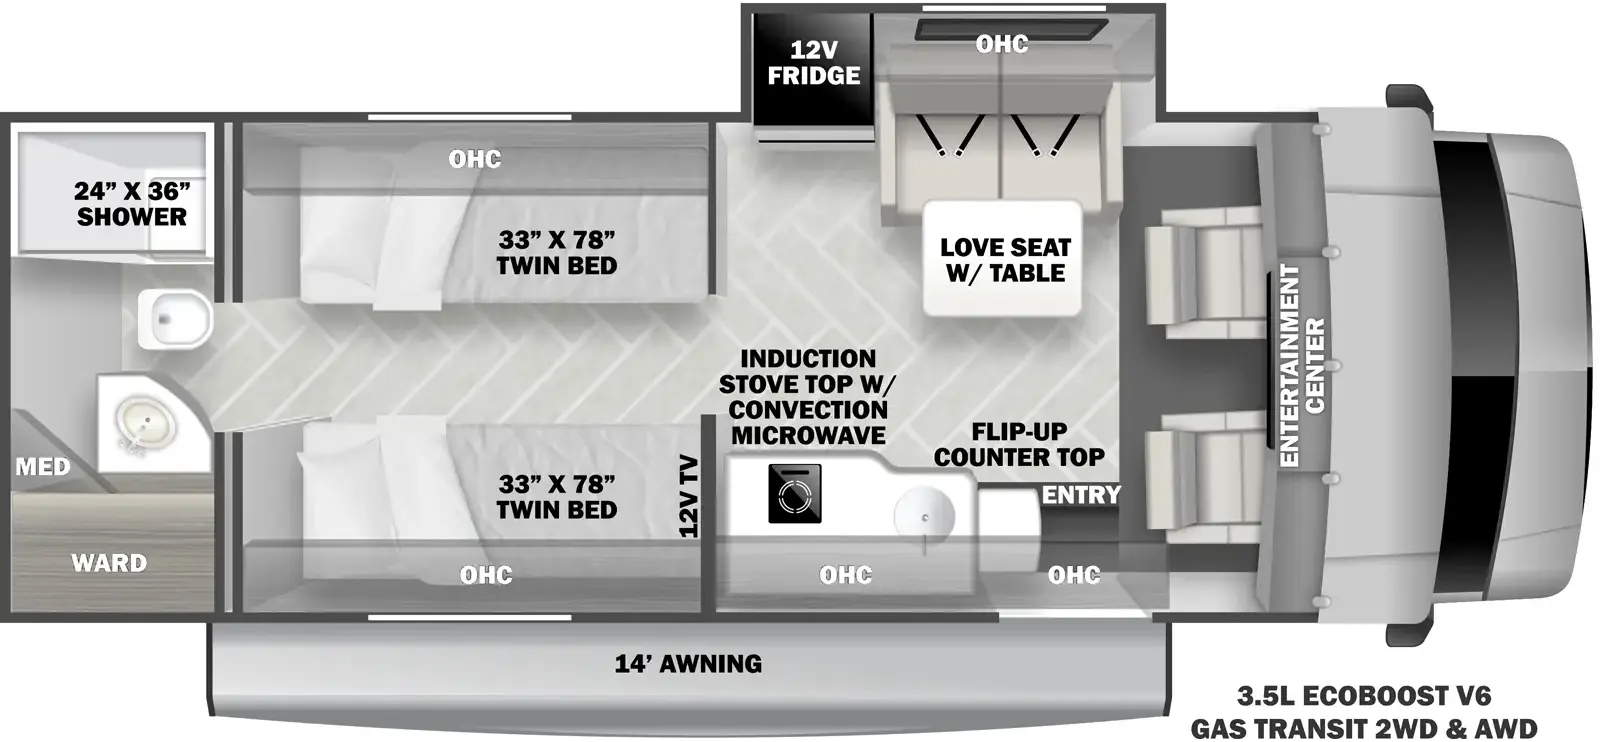 TS2370 Floorplan Image